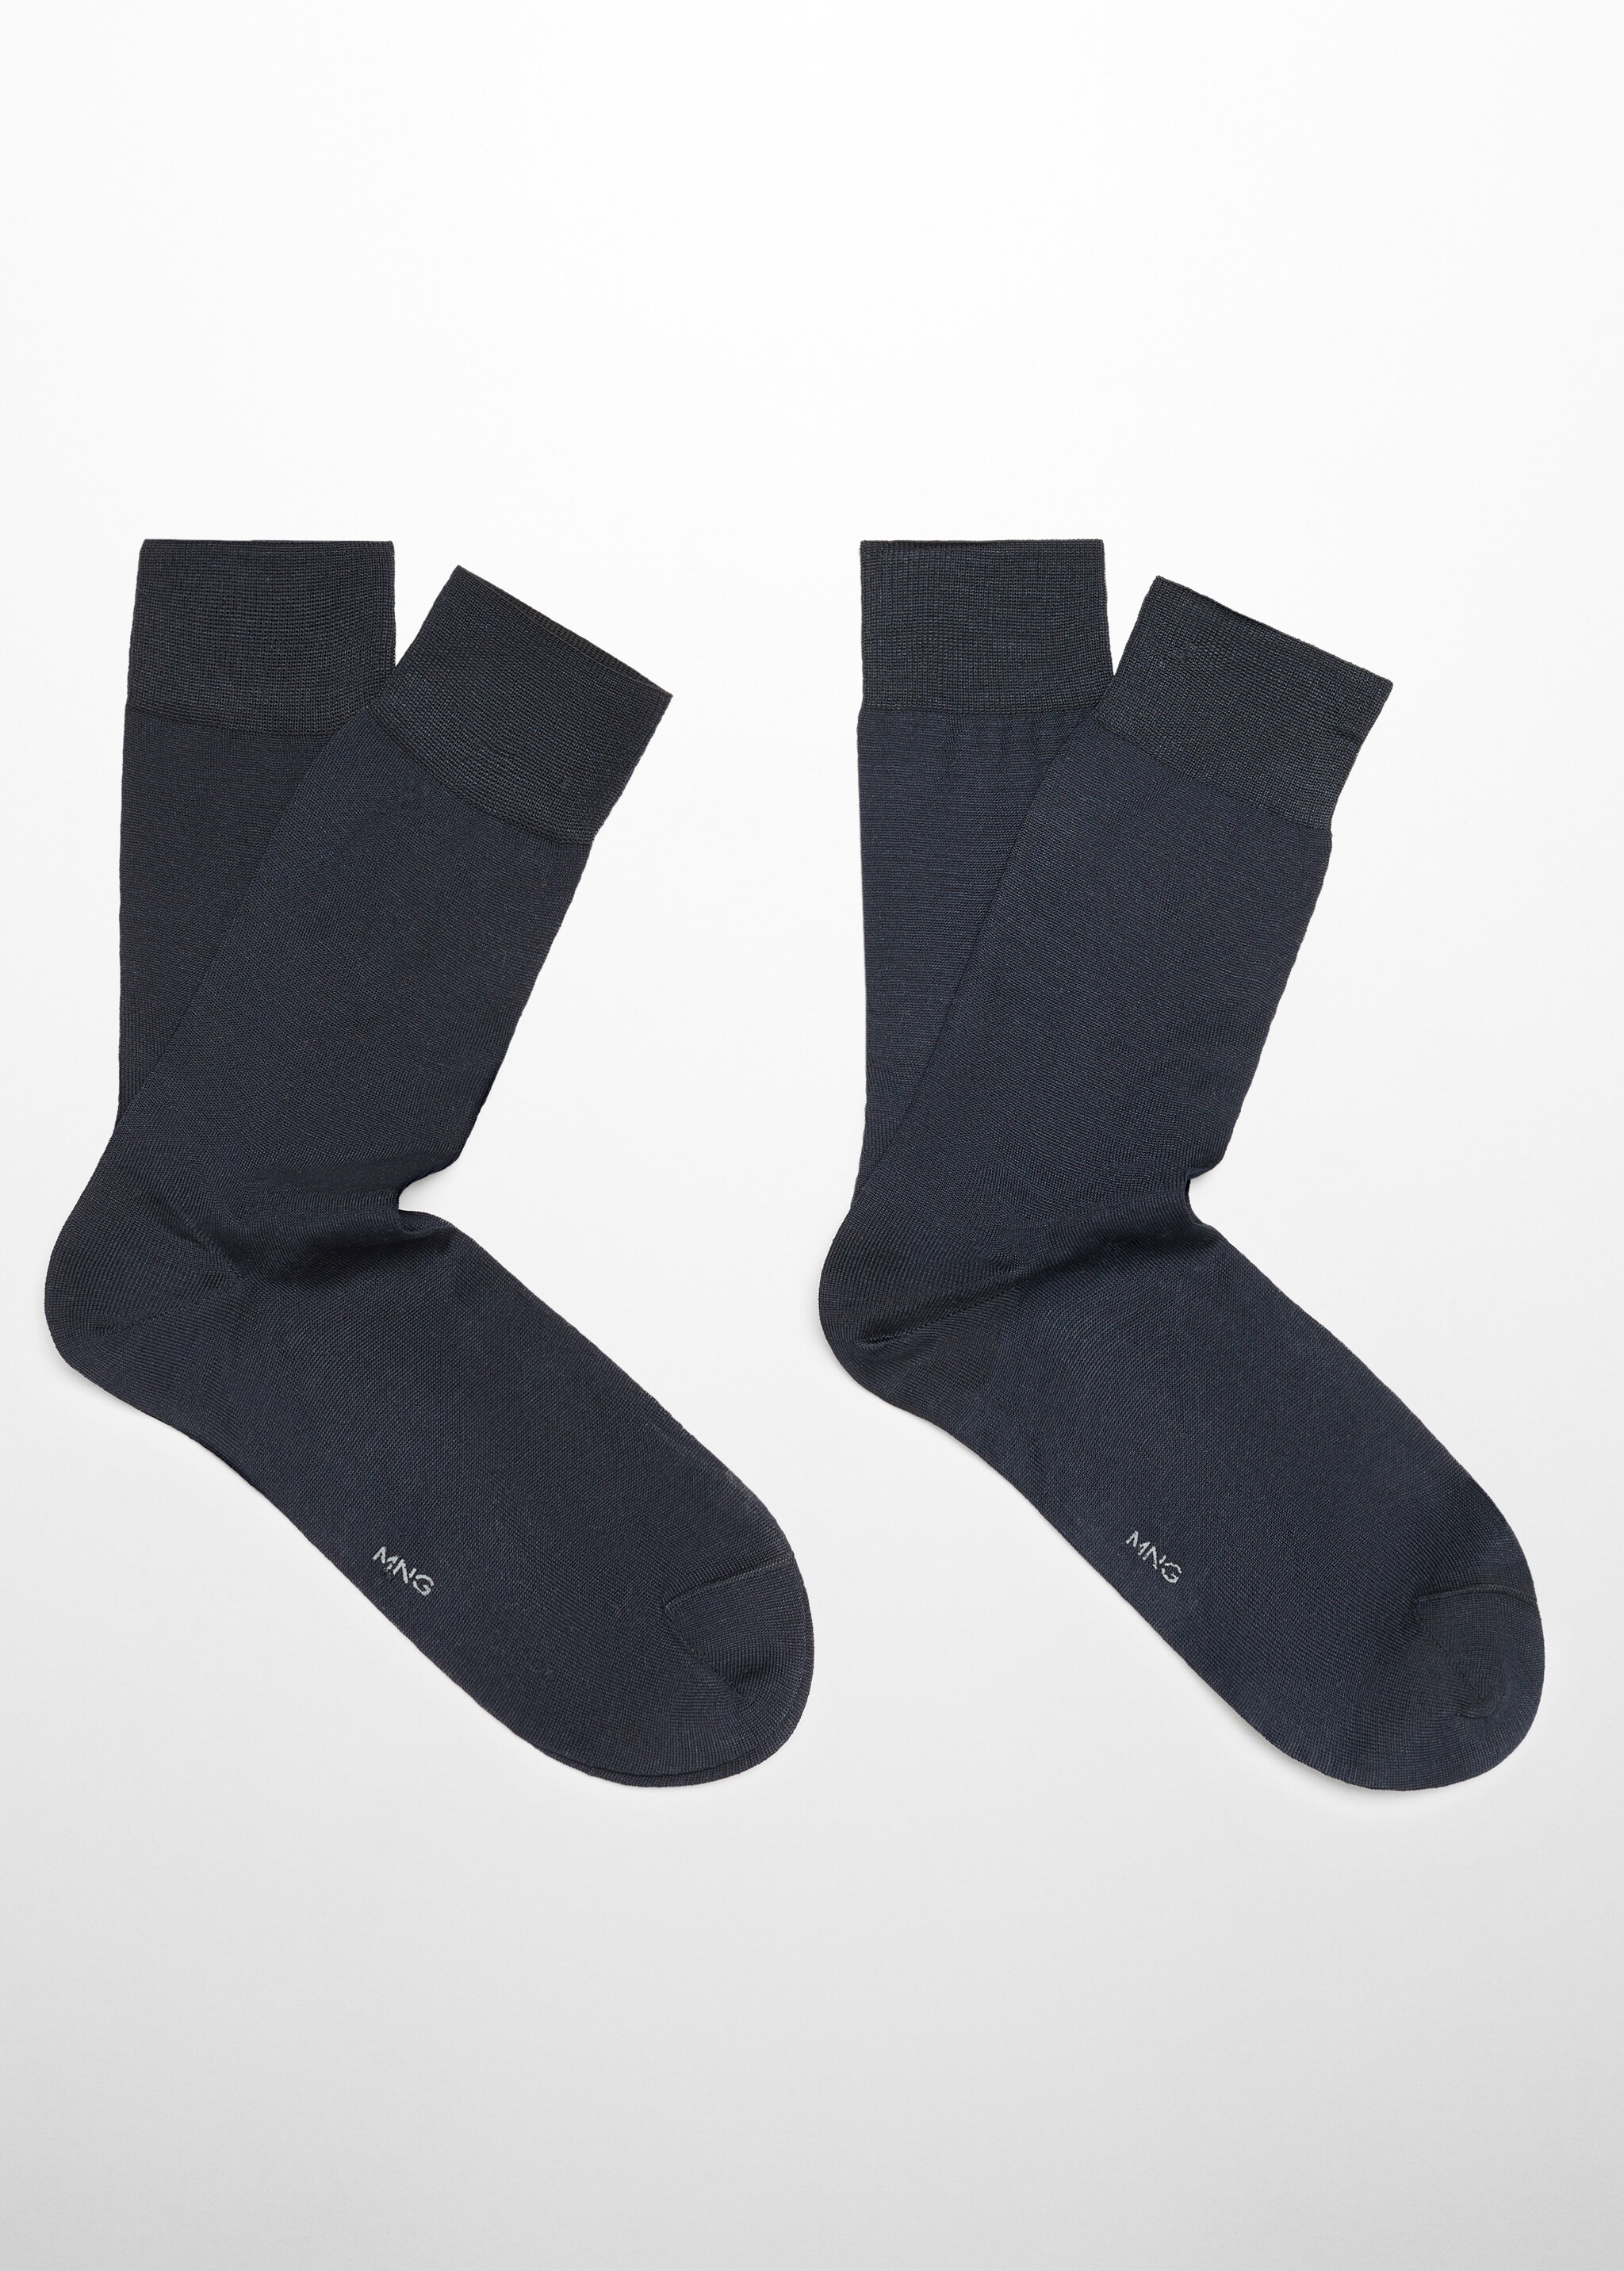 Basic cotton socks - Article without model